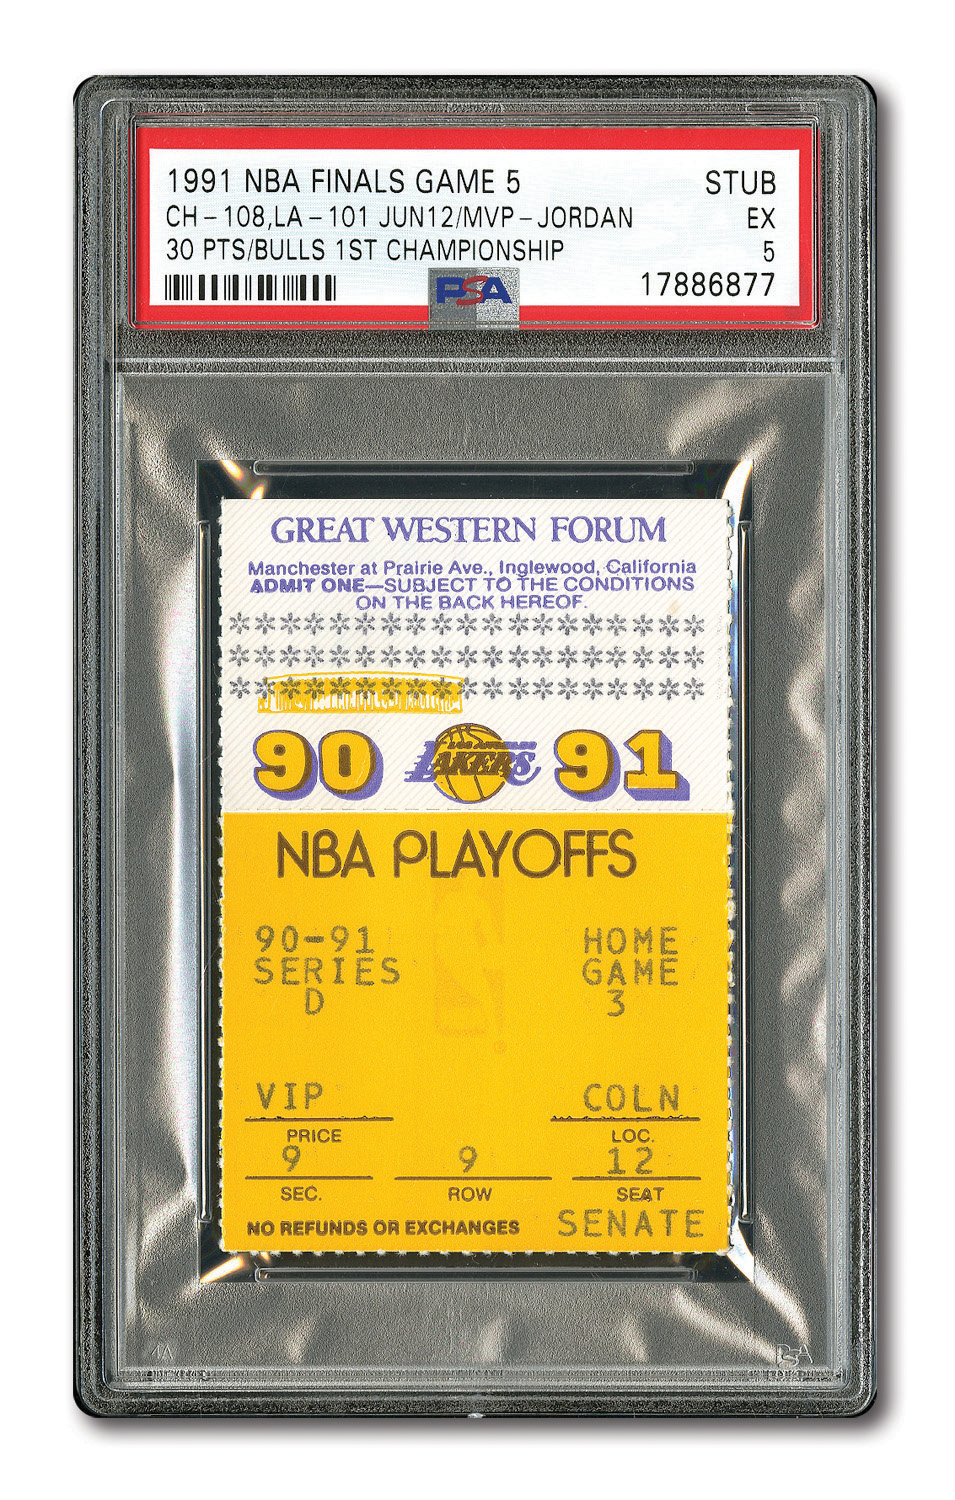 June 7, 1998 - NBA Finals Game 3 Ticket Stub - Utah Jazz vs